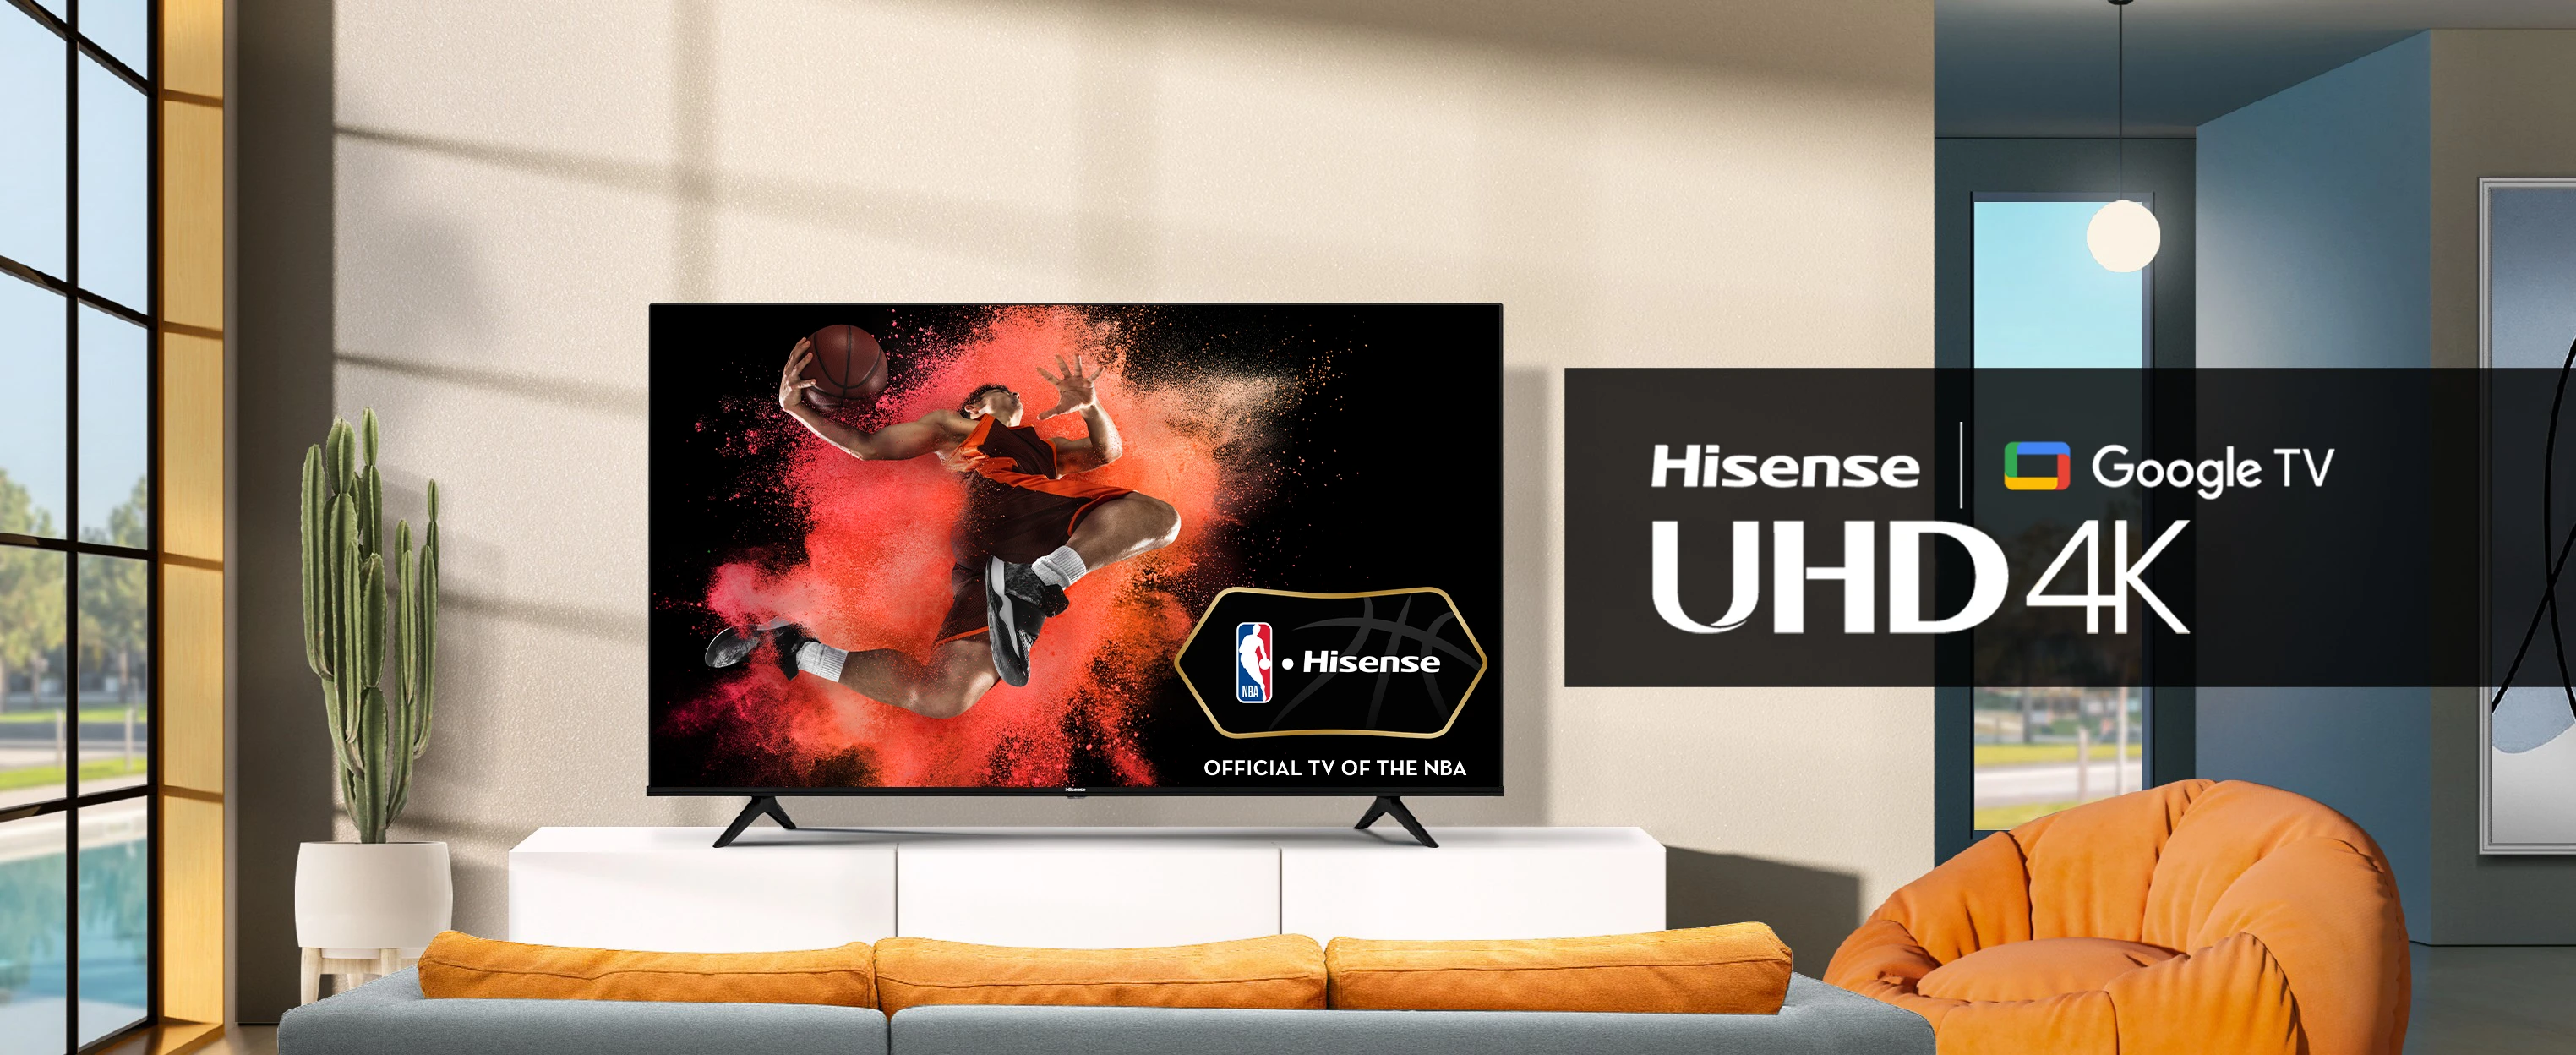 55 4K UHD Hisense Roku TV (55R6G) - Hisense USA(SUPPORT)